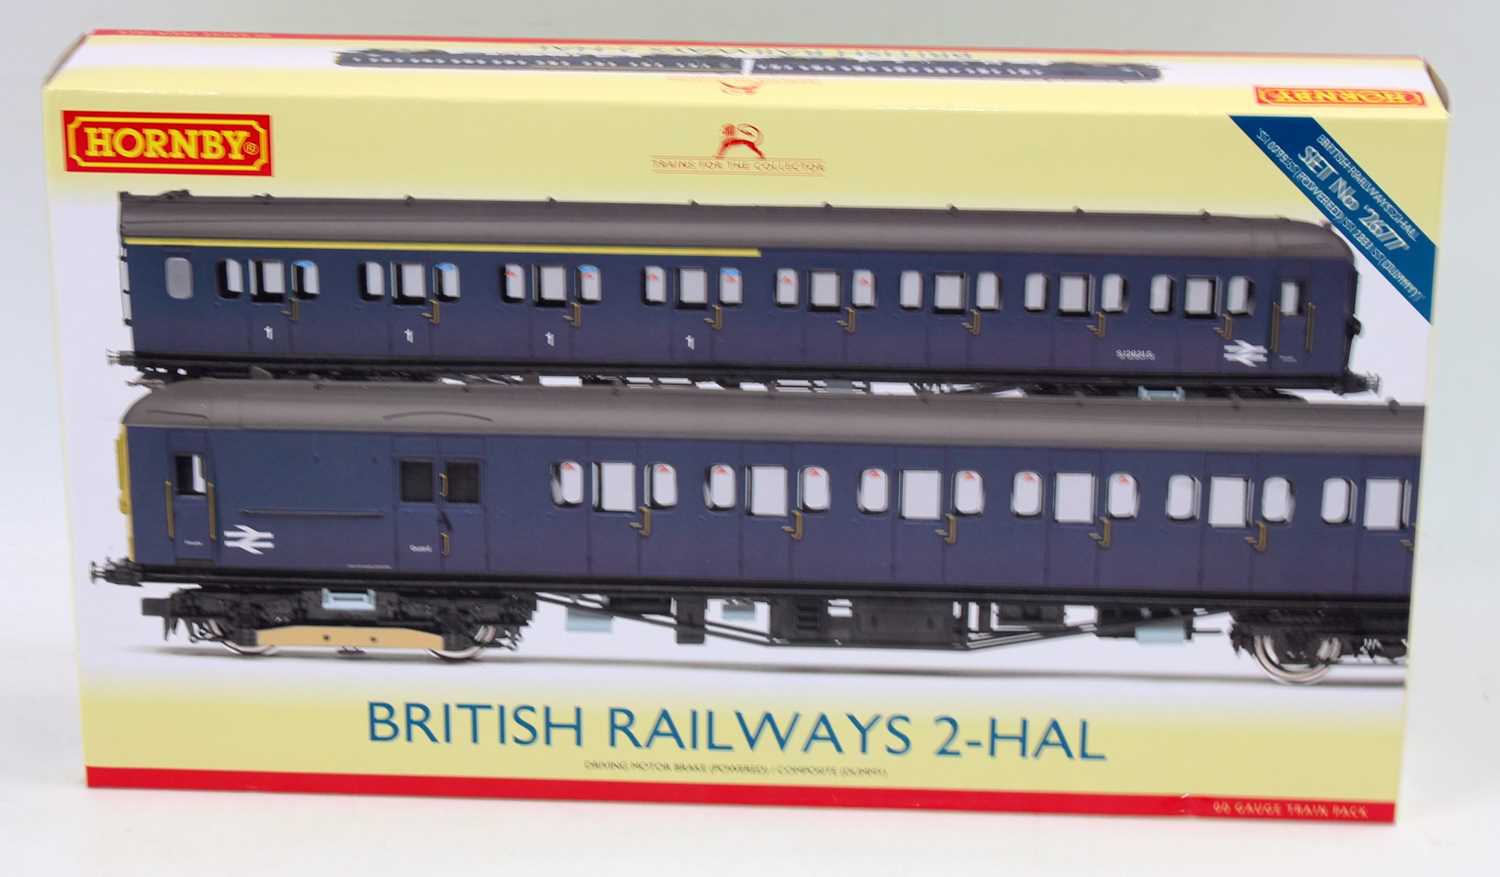 Hornby Railways 00 Gauge R3341 Set No.2677 British Railways 2-HAL Set, as issued in the original box